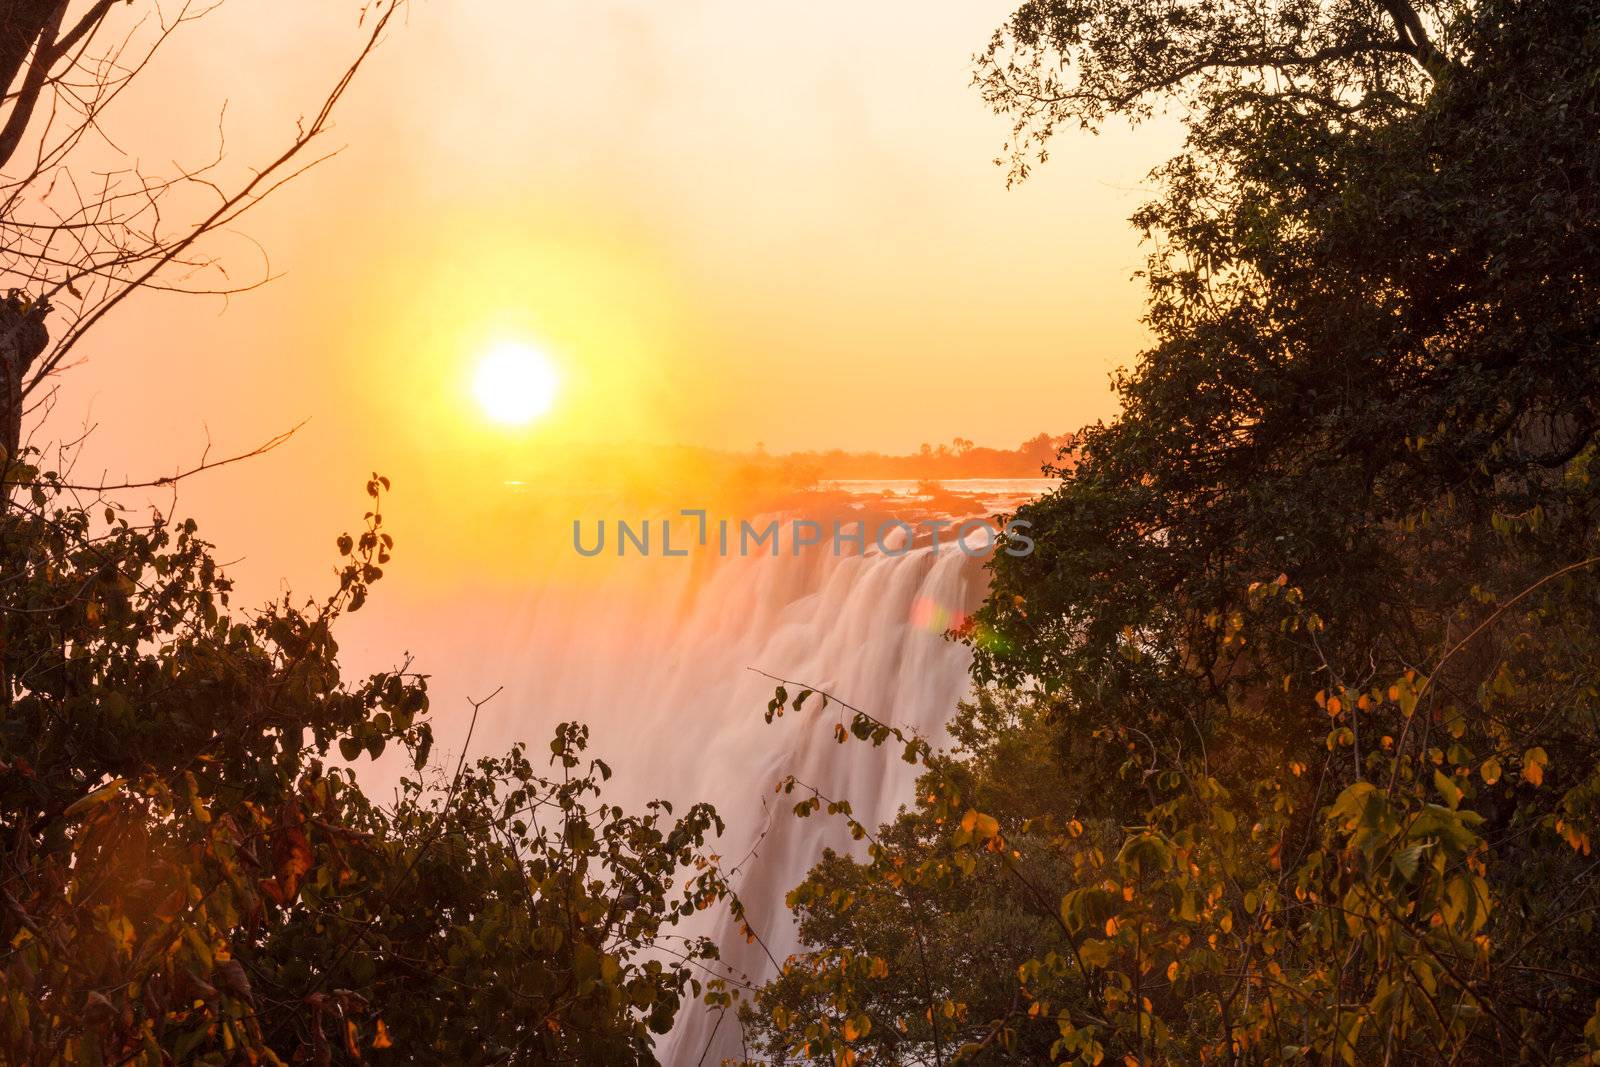 Zambezi River and Victoria Falls seen from Livingstone, Zambia